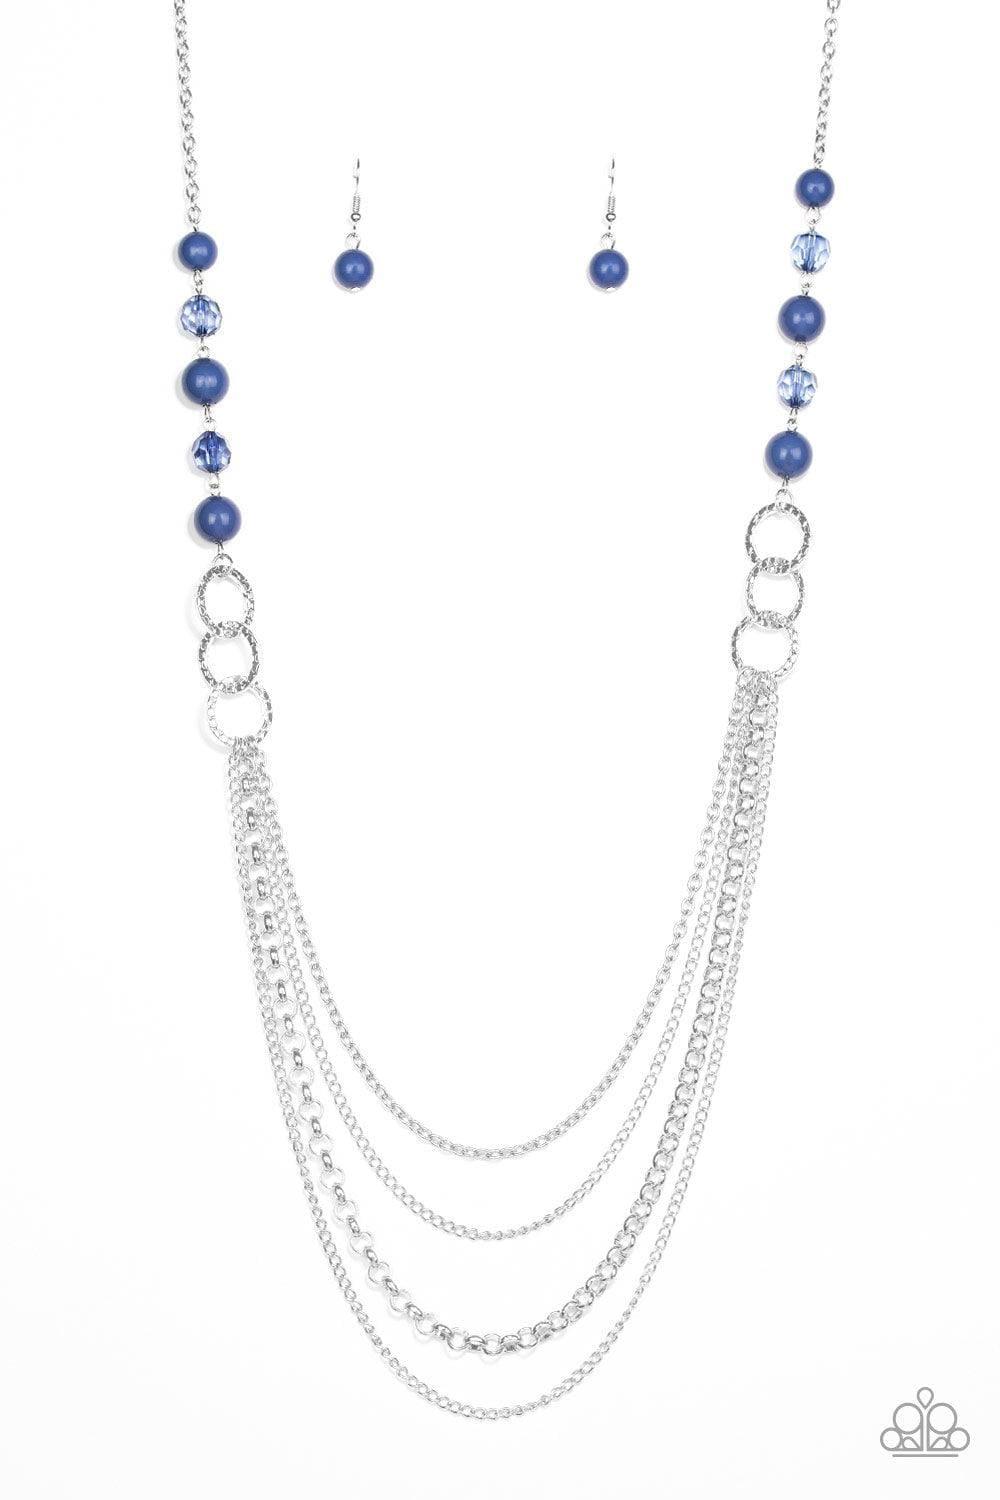 Paparazzi Accessories - Vividly Vivid - Blue Necklace - Bling by JessieK